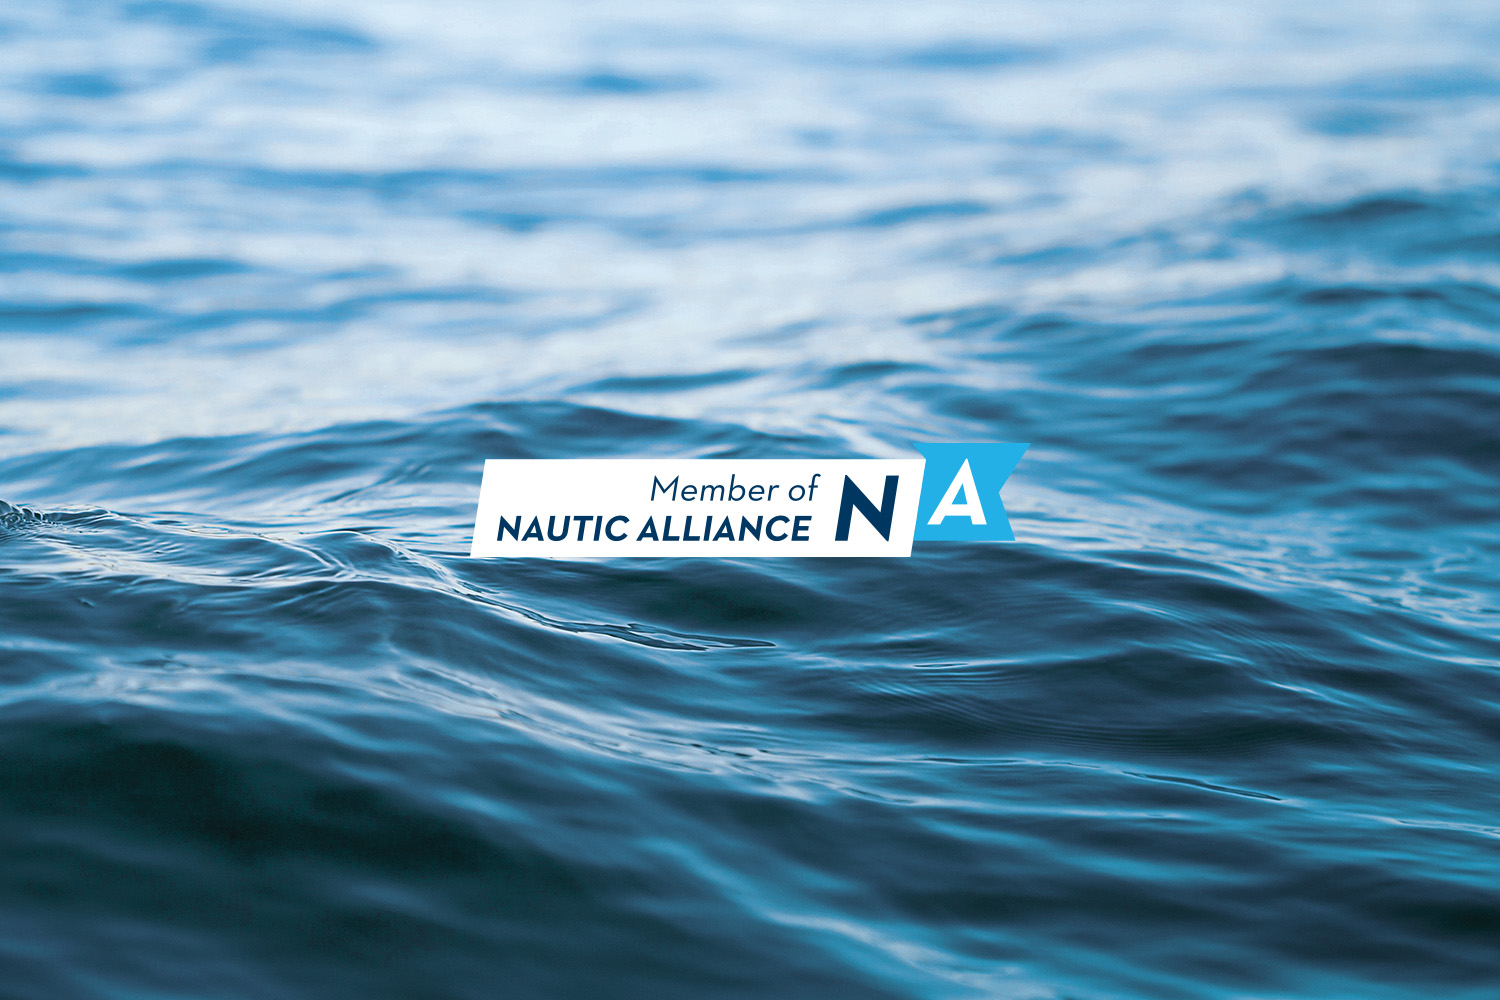 Member of Nautic Alliance